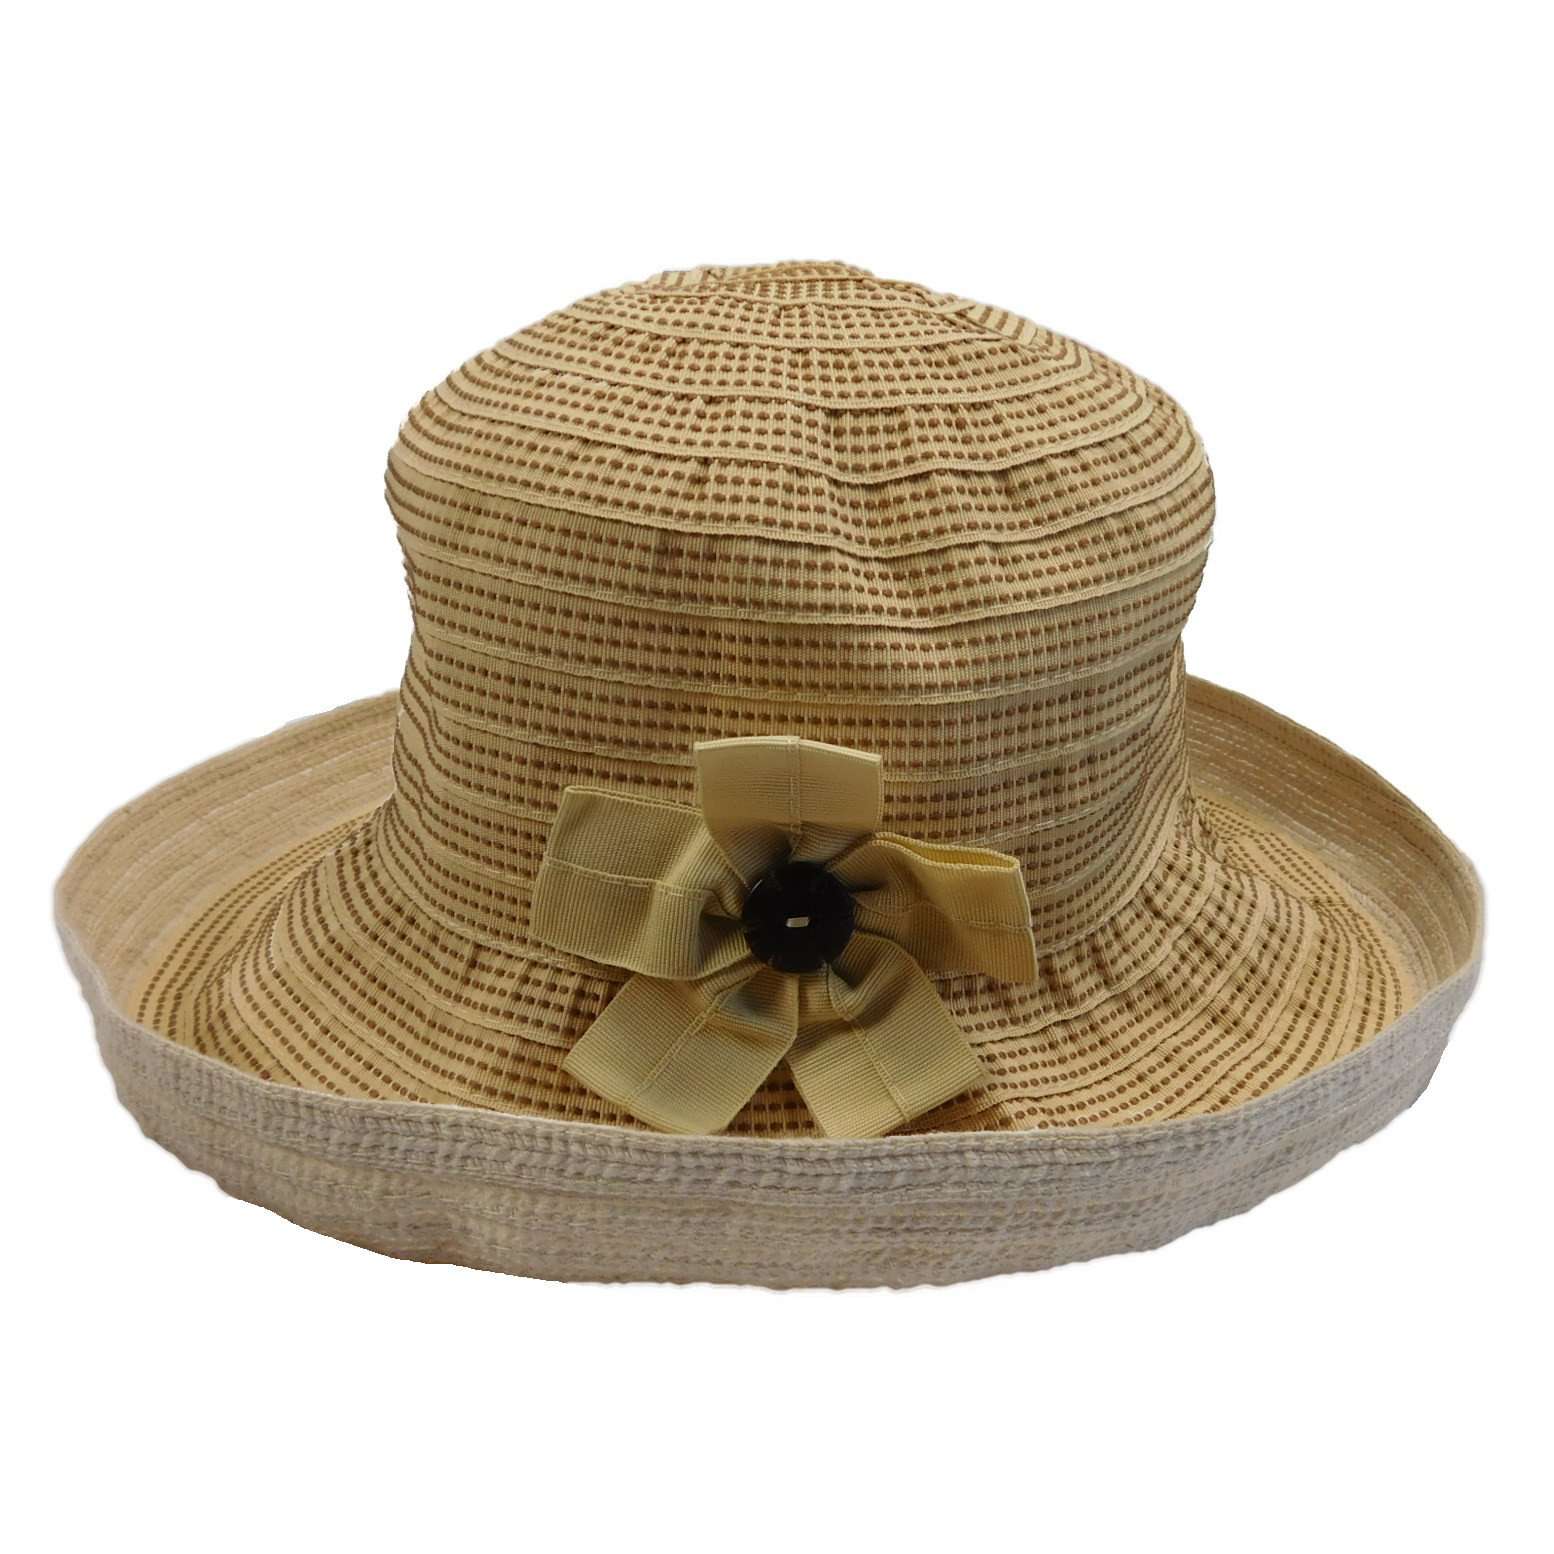 Upturned Brim Hat with Decorative Stitching Kettle Brim Hat Jeanne Simmons WSPO717TN Tan  